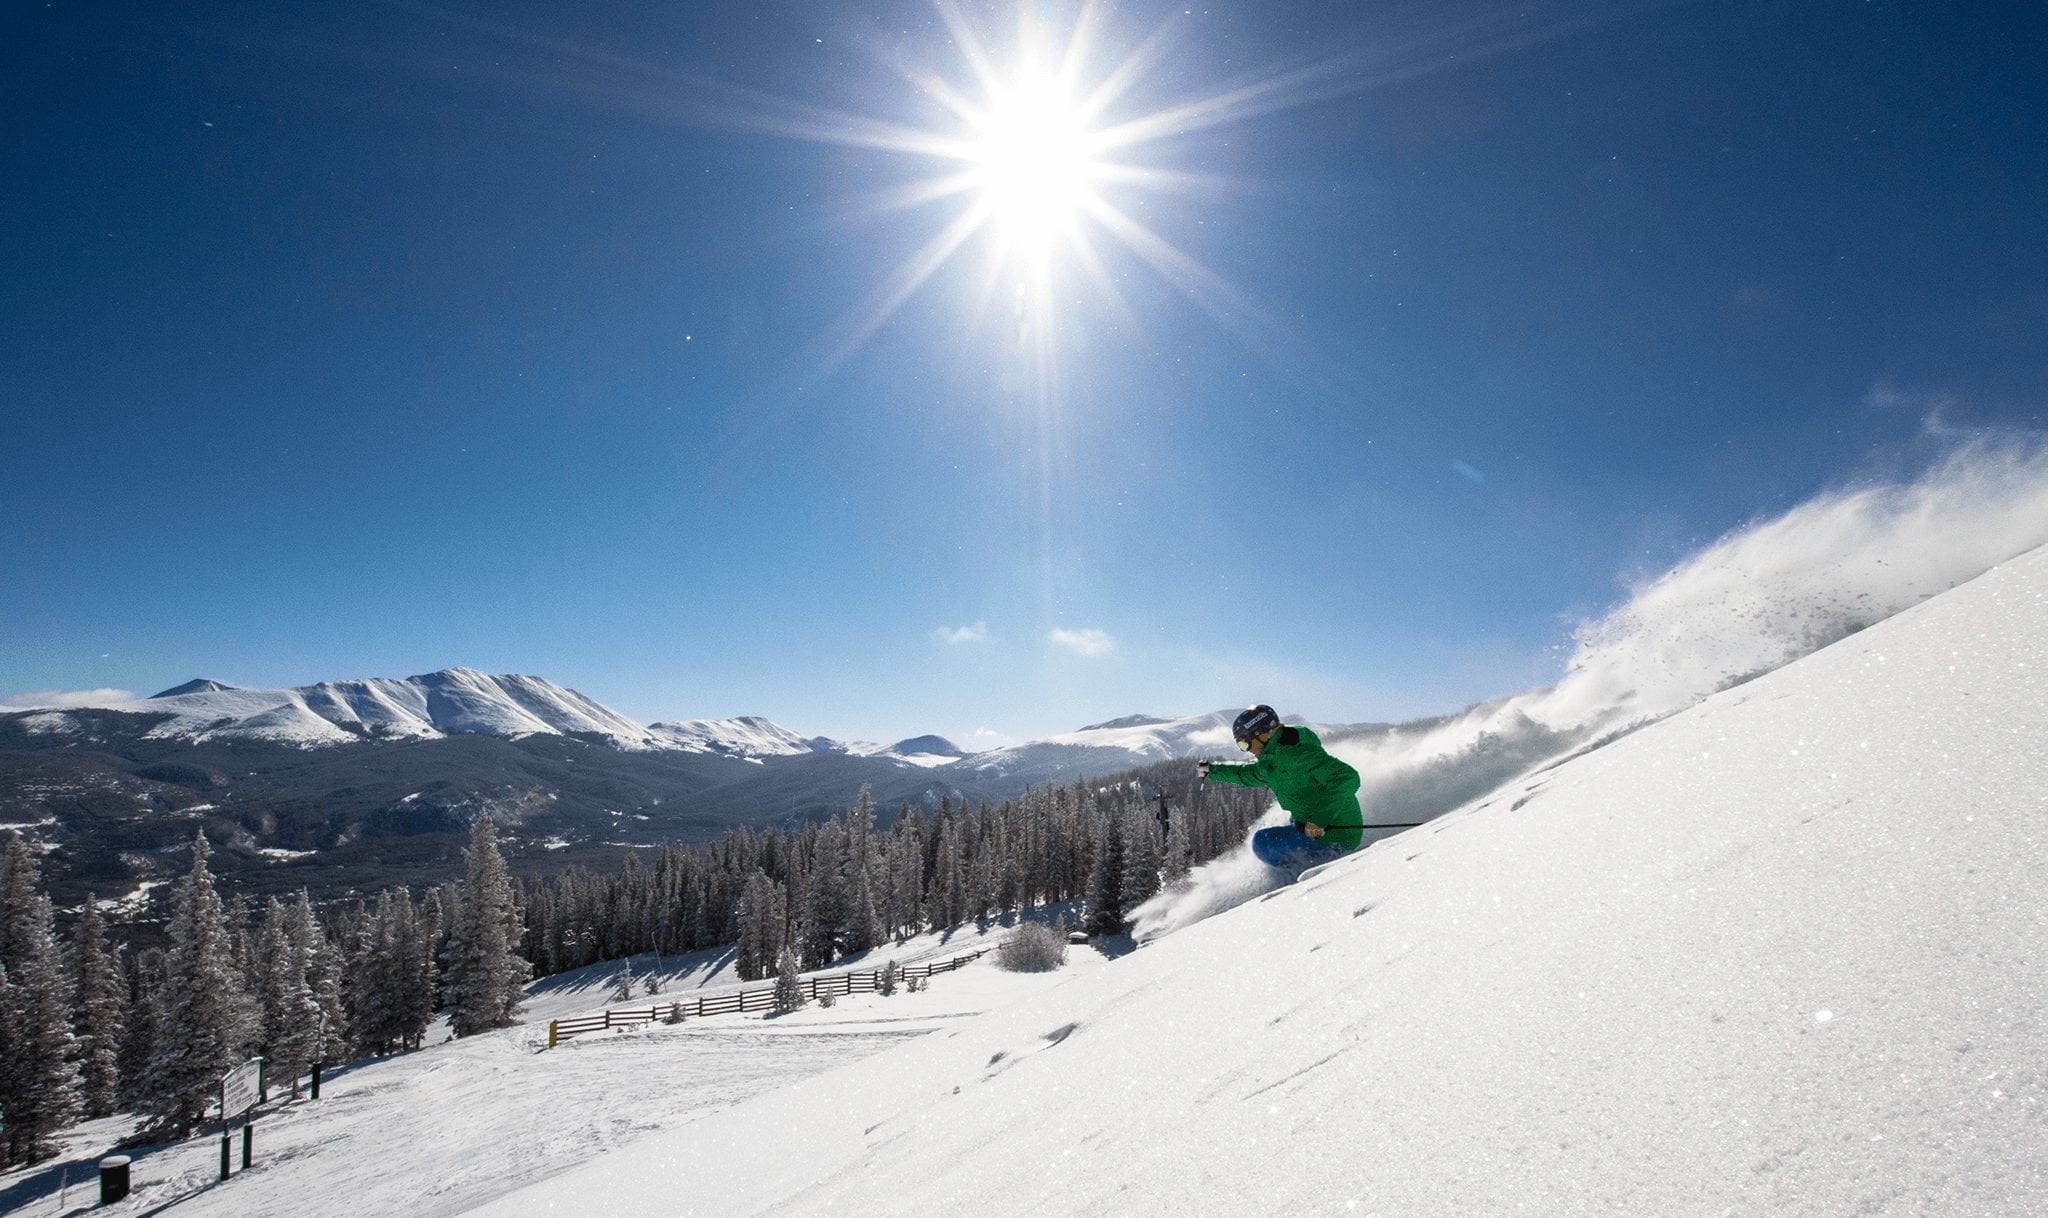 Skier on fresh powder during a beautiful day at the Breckenridge Ski Resort